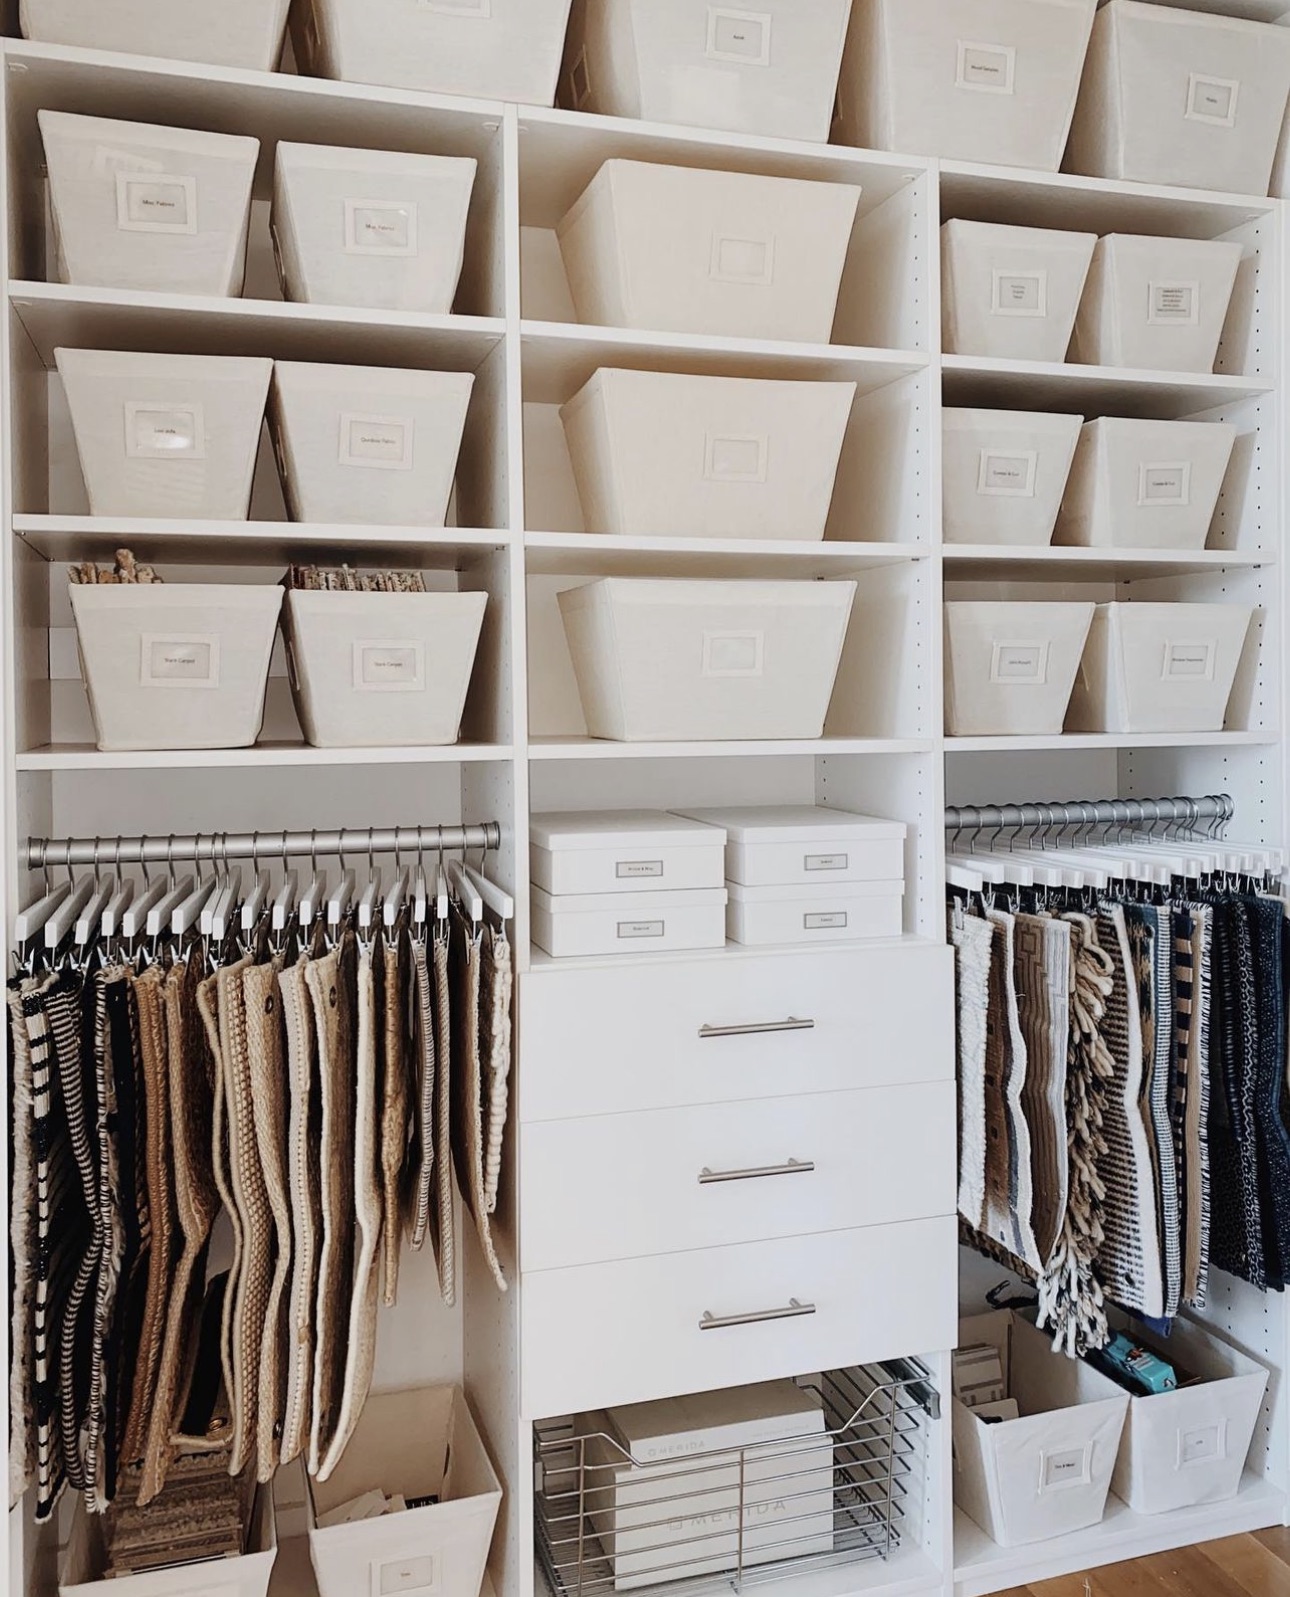 Organized Closet with cloth bins